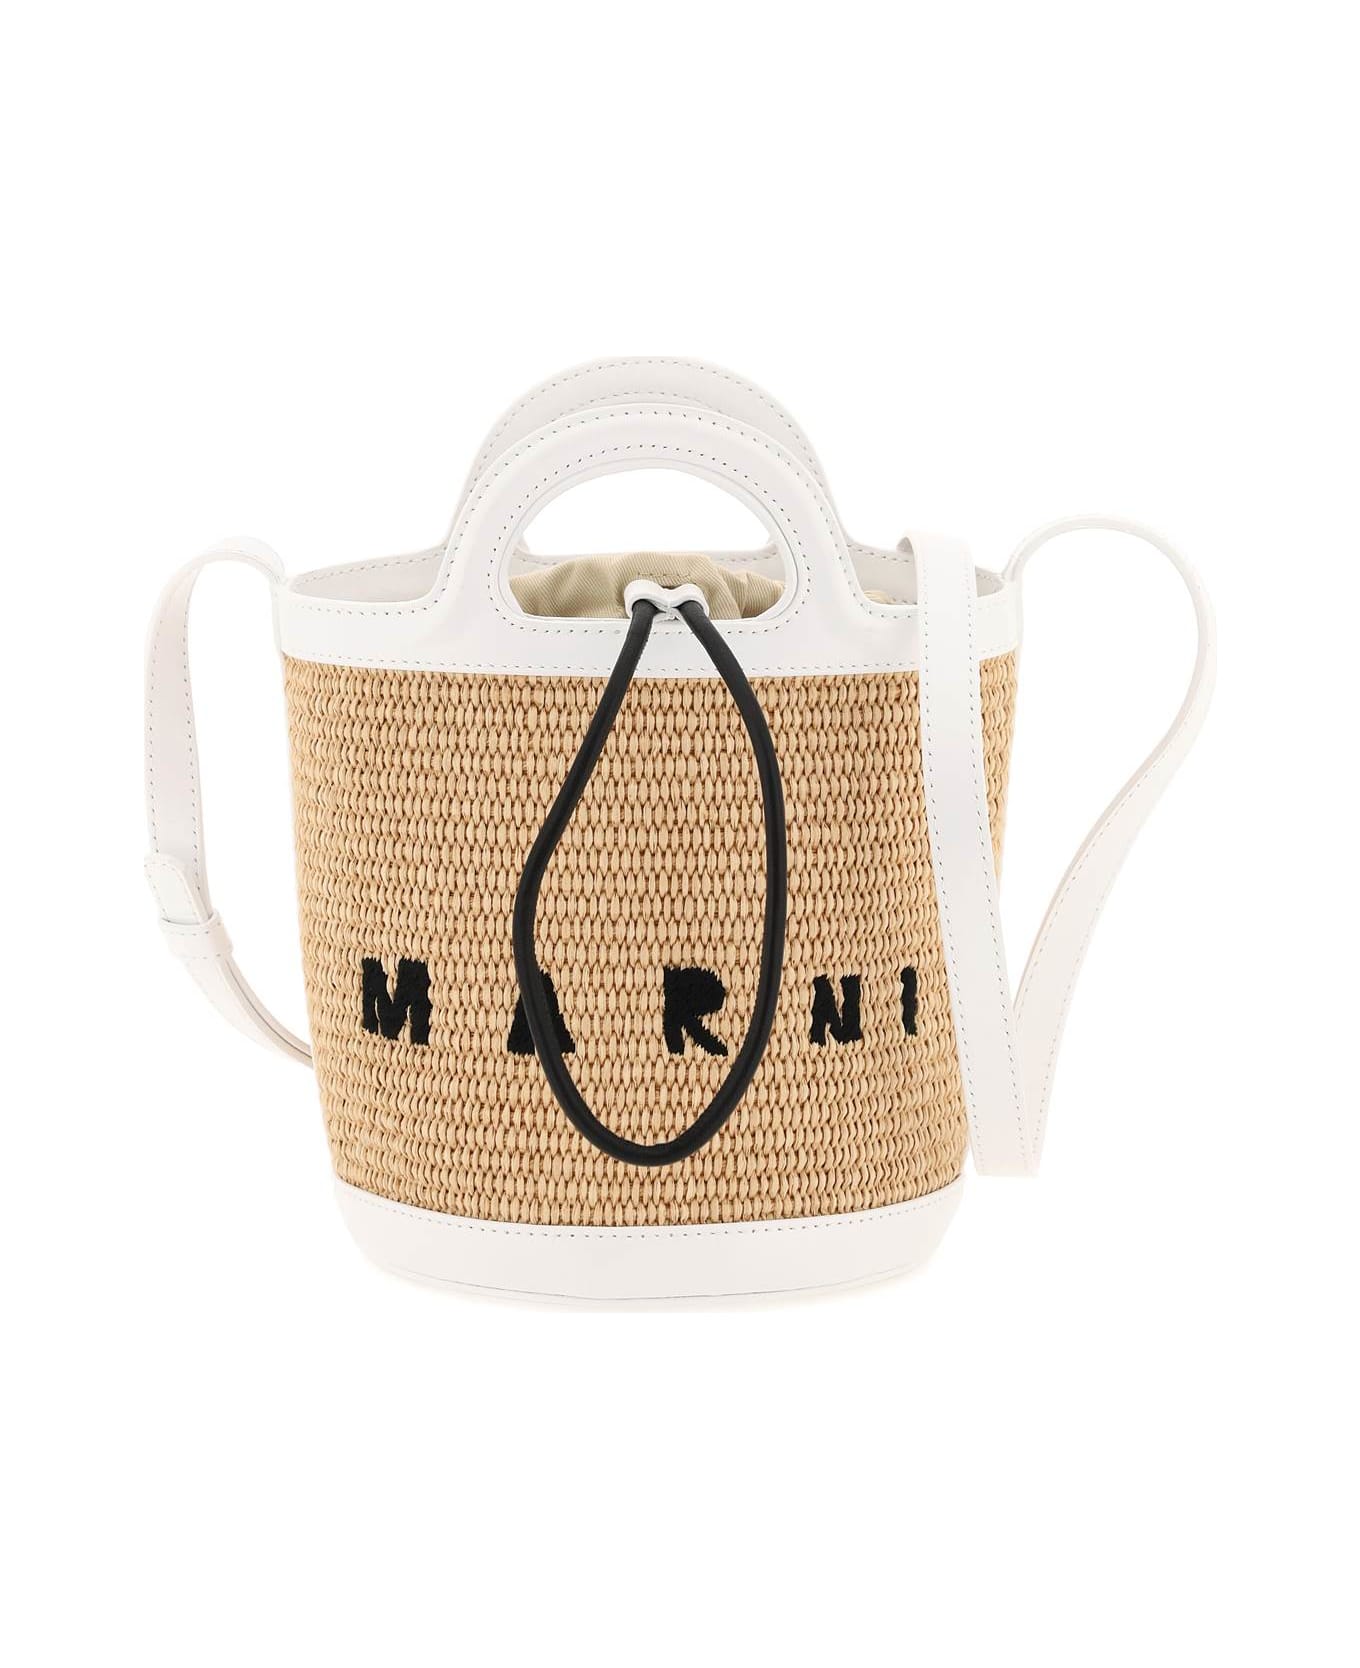 Marni Tropicalia Mini Bag In White Leather And Natural Raffia - White/natural